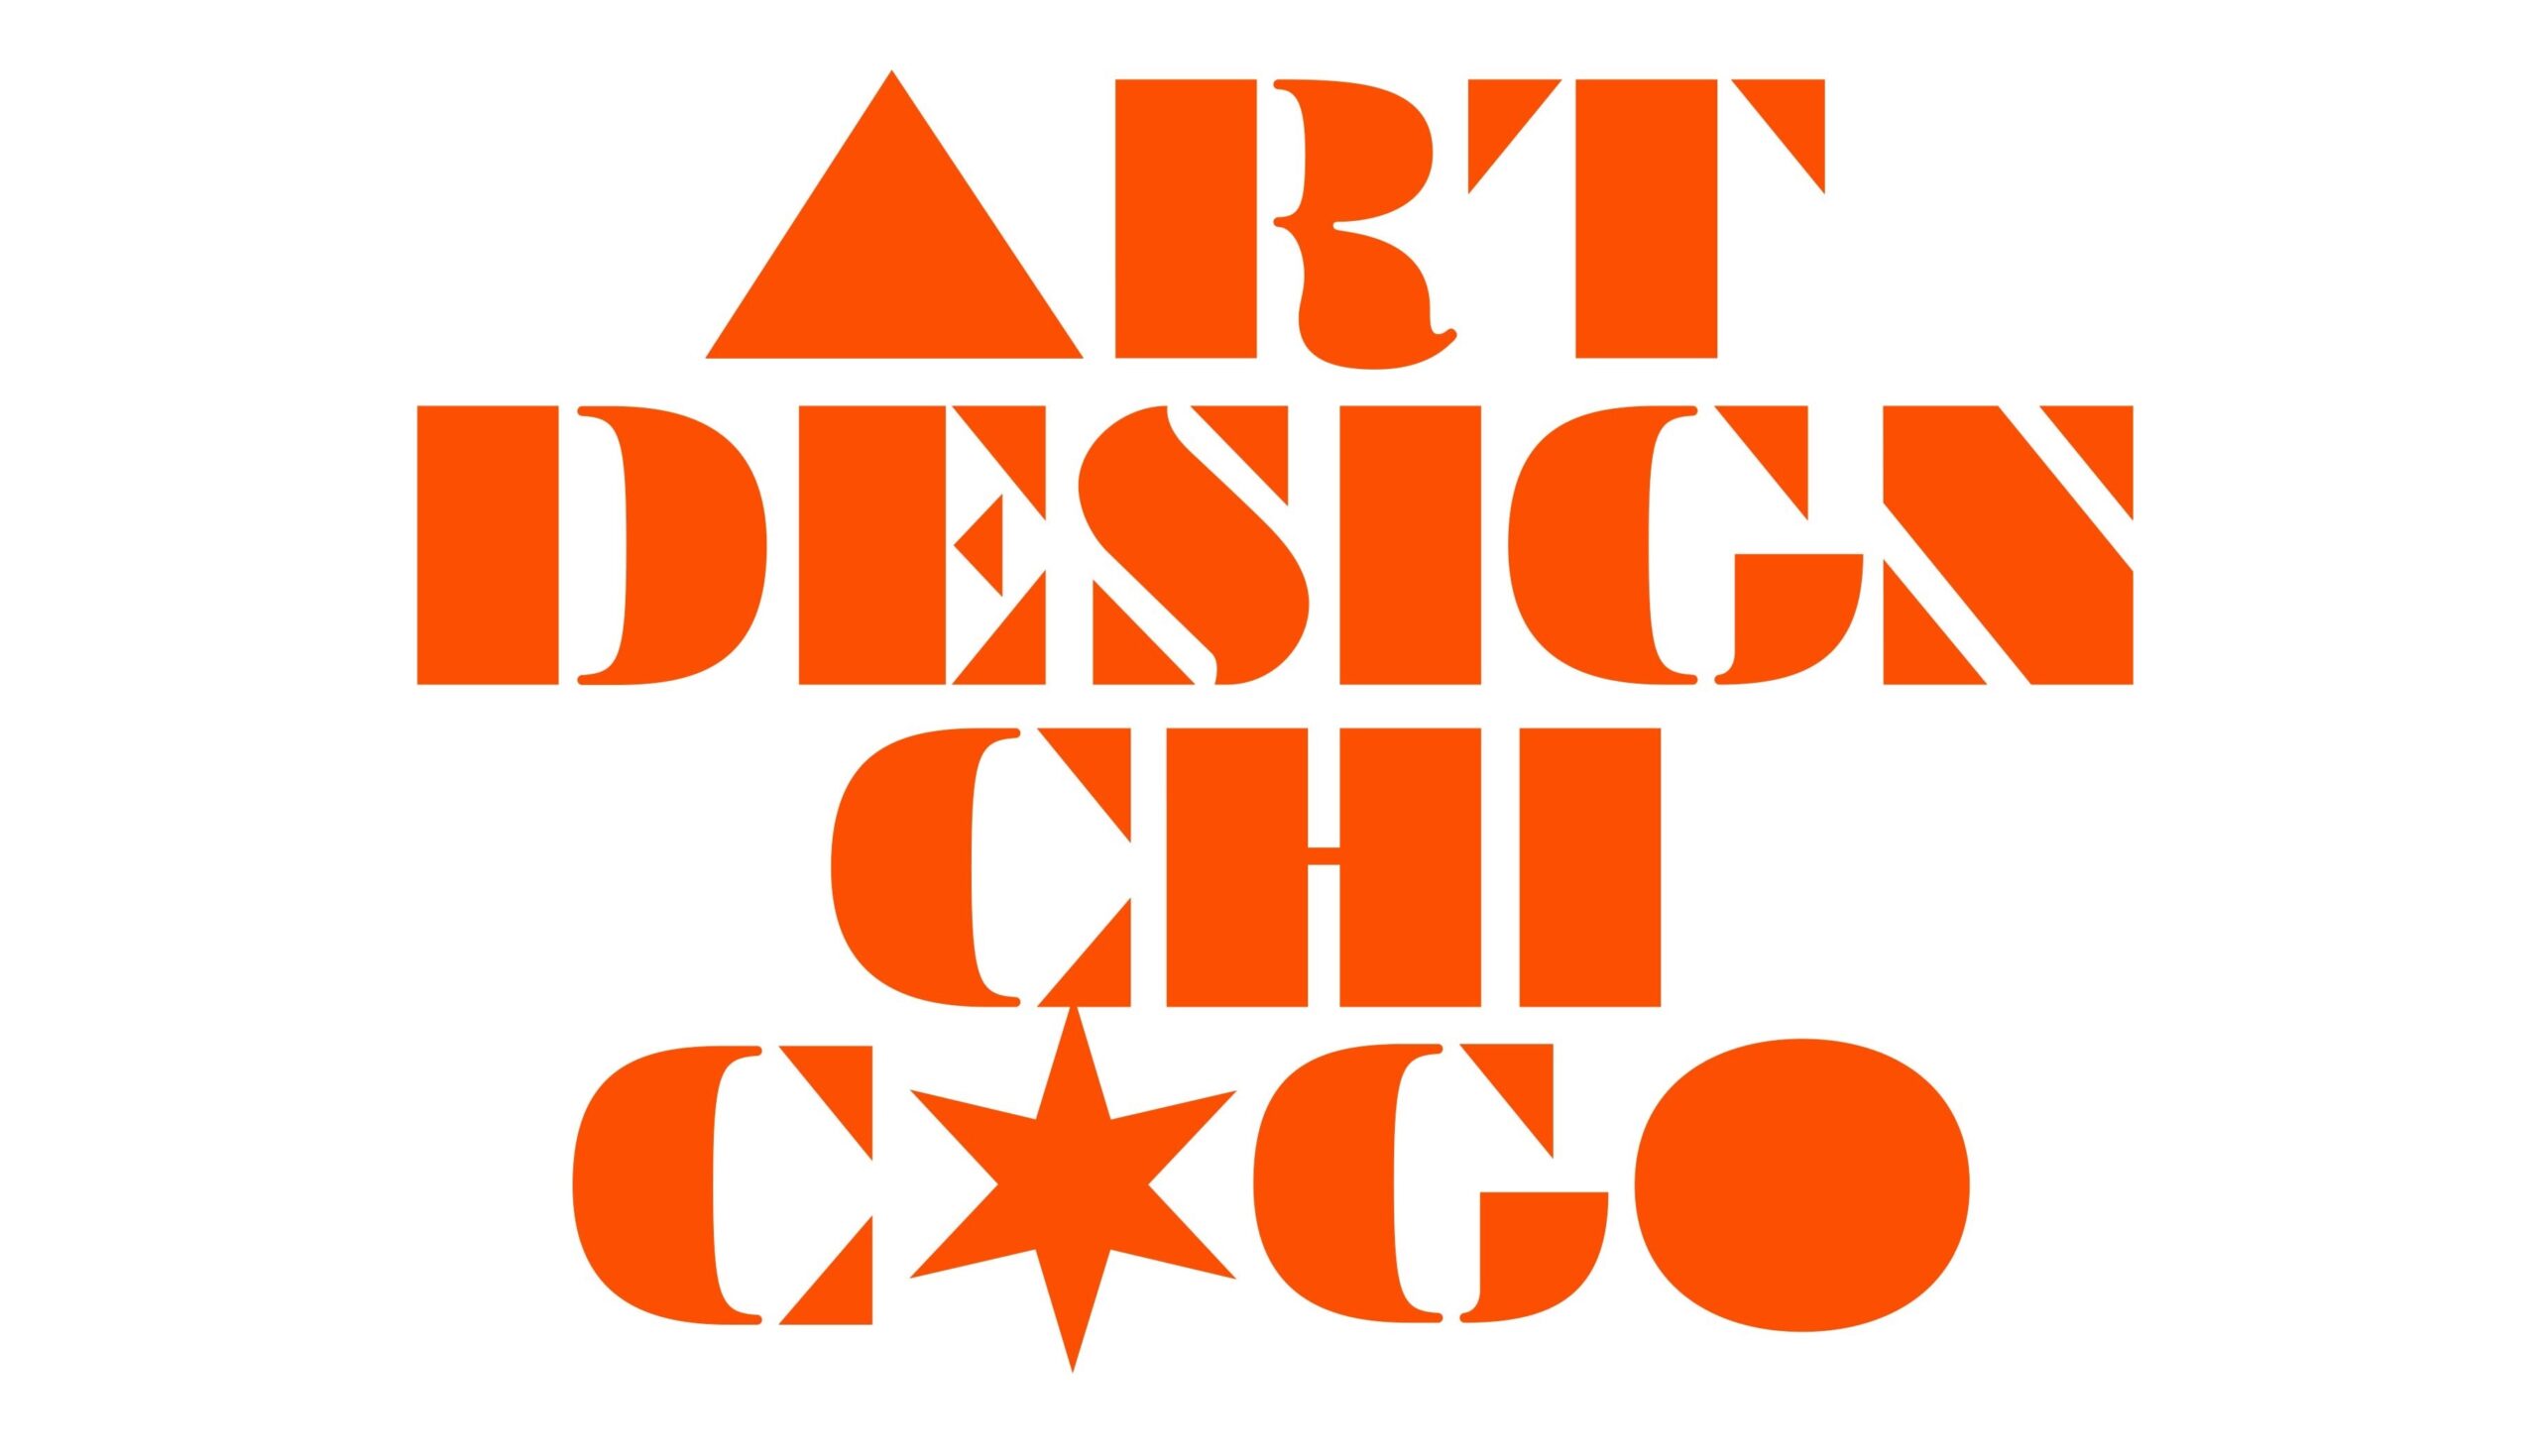 Art Design Chicago logo